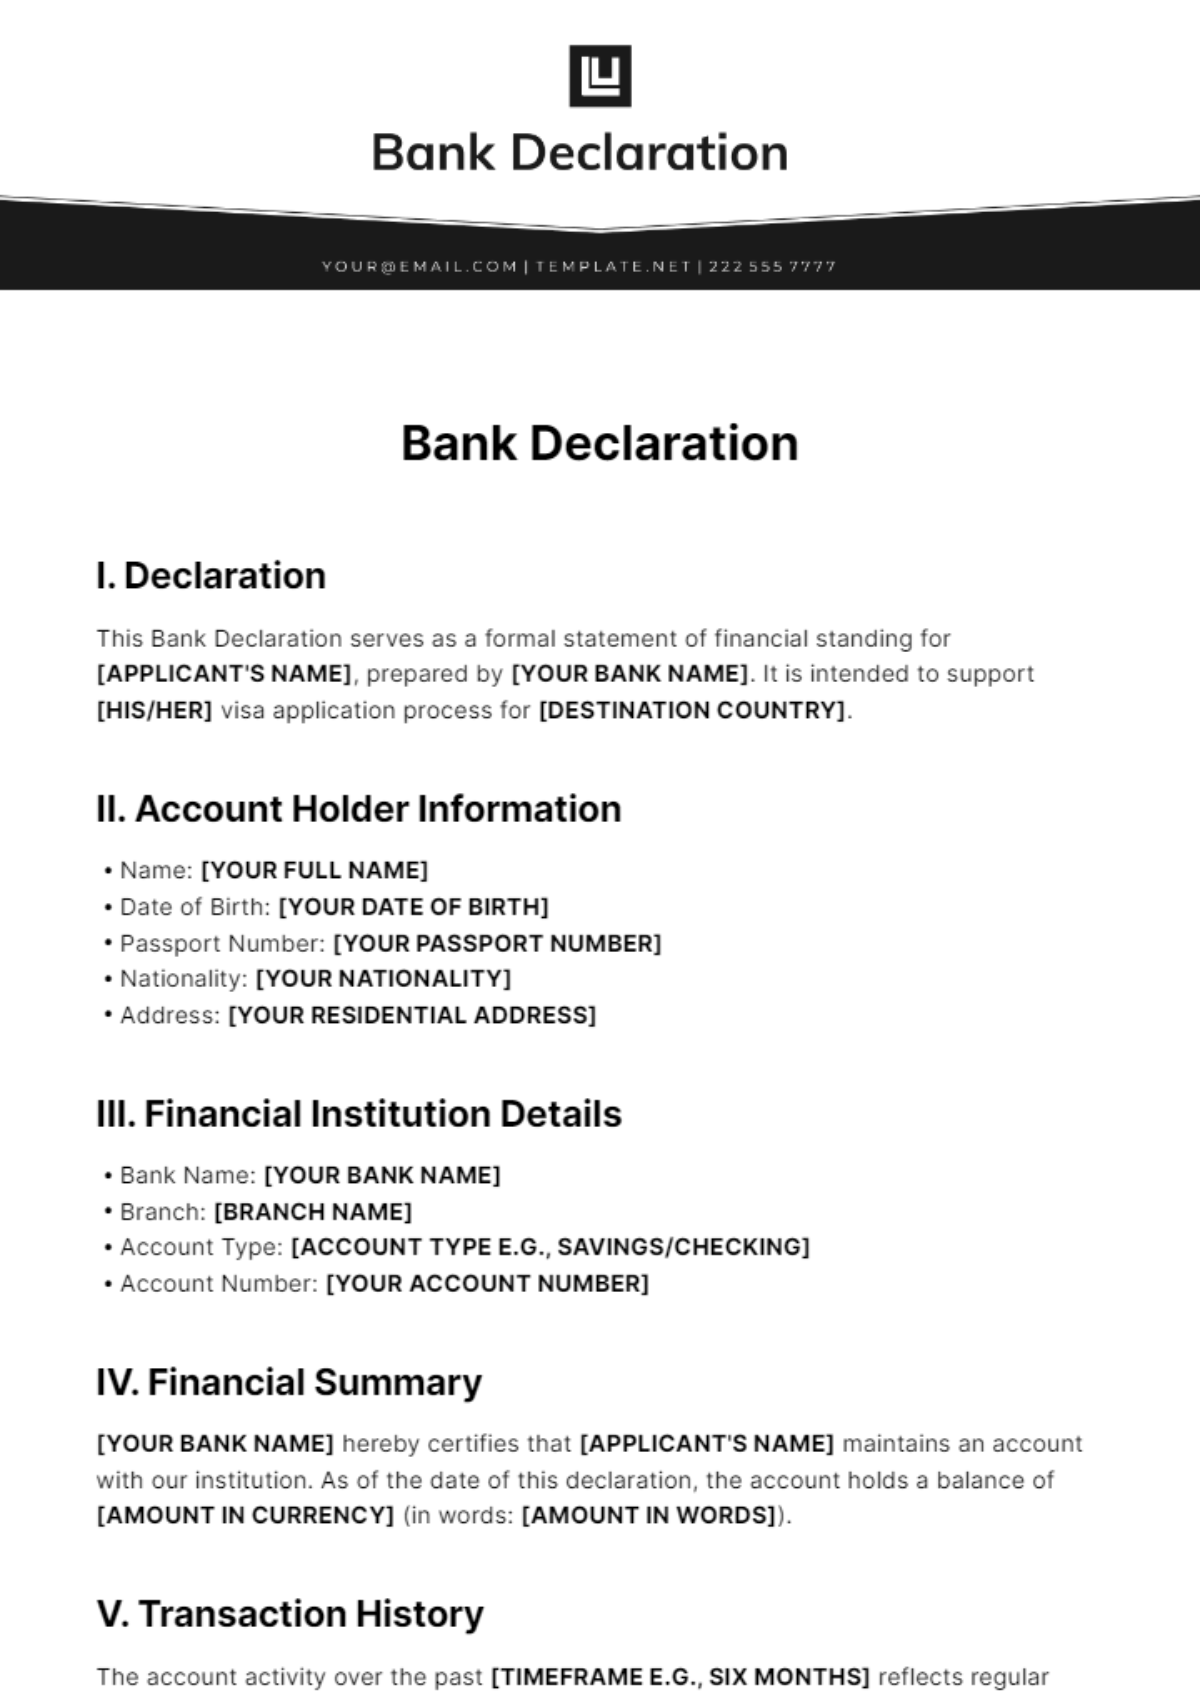 Bank Declaration Template